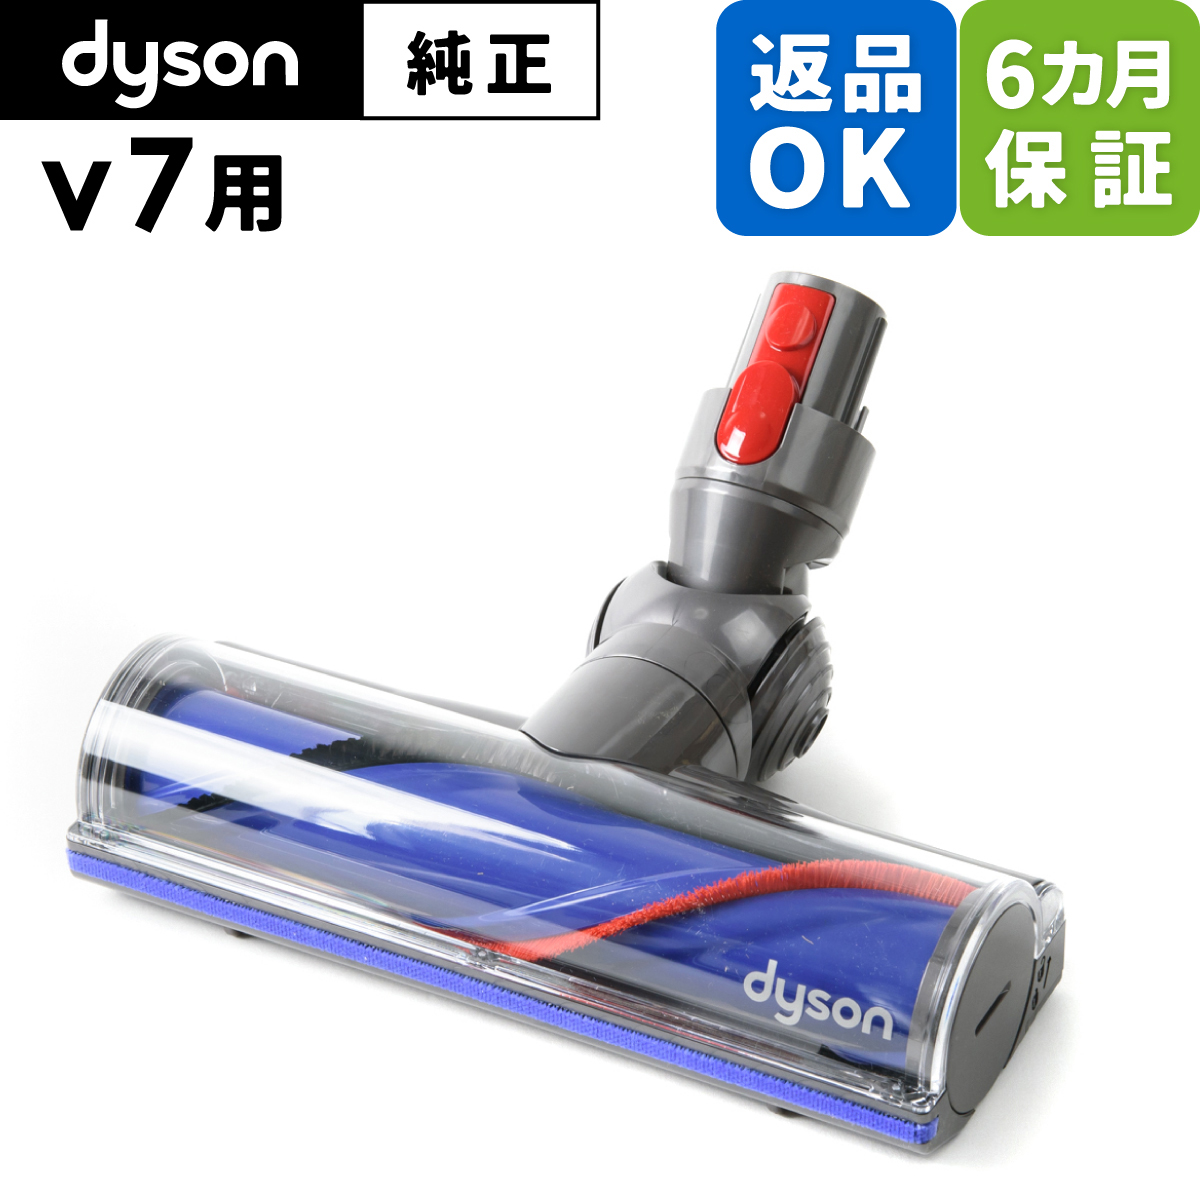 Dyson ダイソン 掃除機 純正 パーツ 返品OK ダイレクトドライブクリーナーヘッド V7 適合 SV11 モデル 部品 交換 ※slim対象外